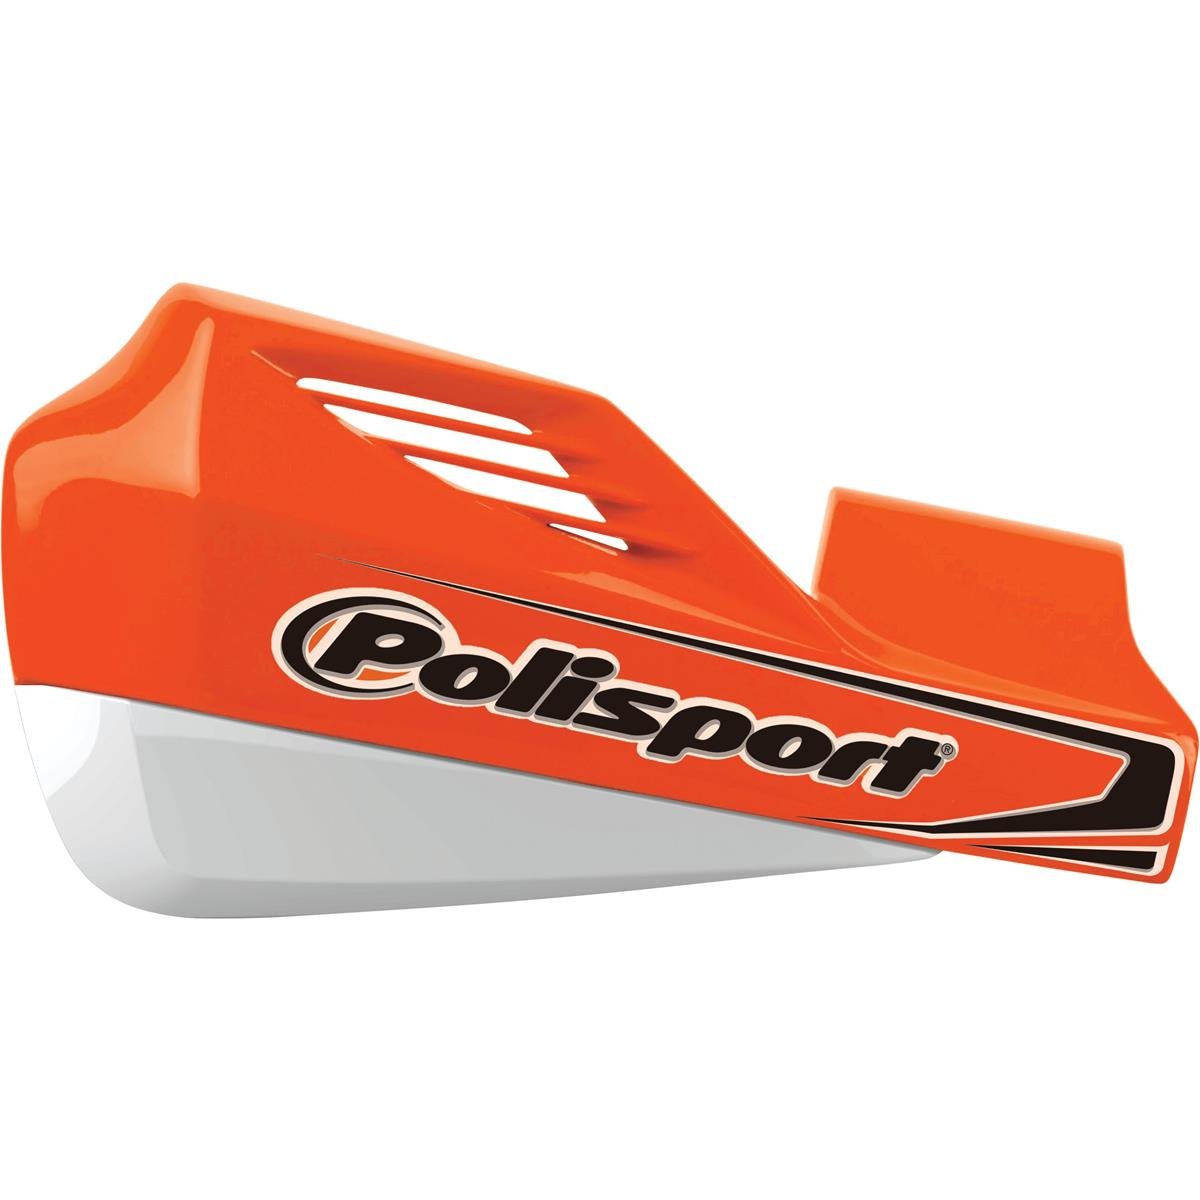 Polisport Handguards MX Rocks Universal with Plastic Mounting Kit, Orange/White